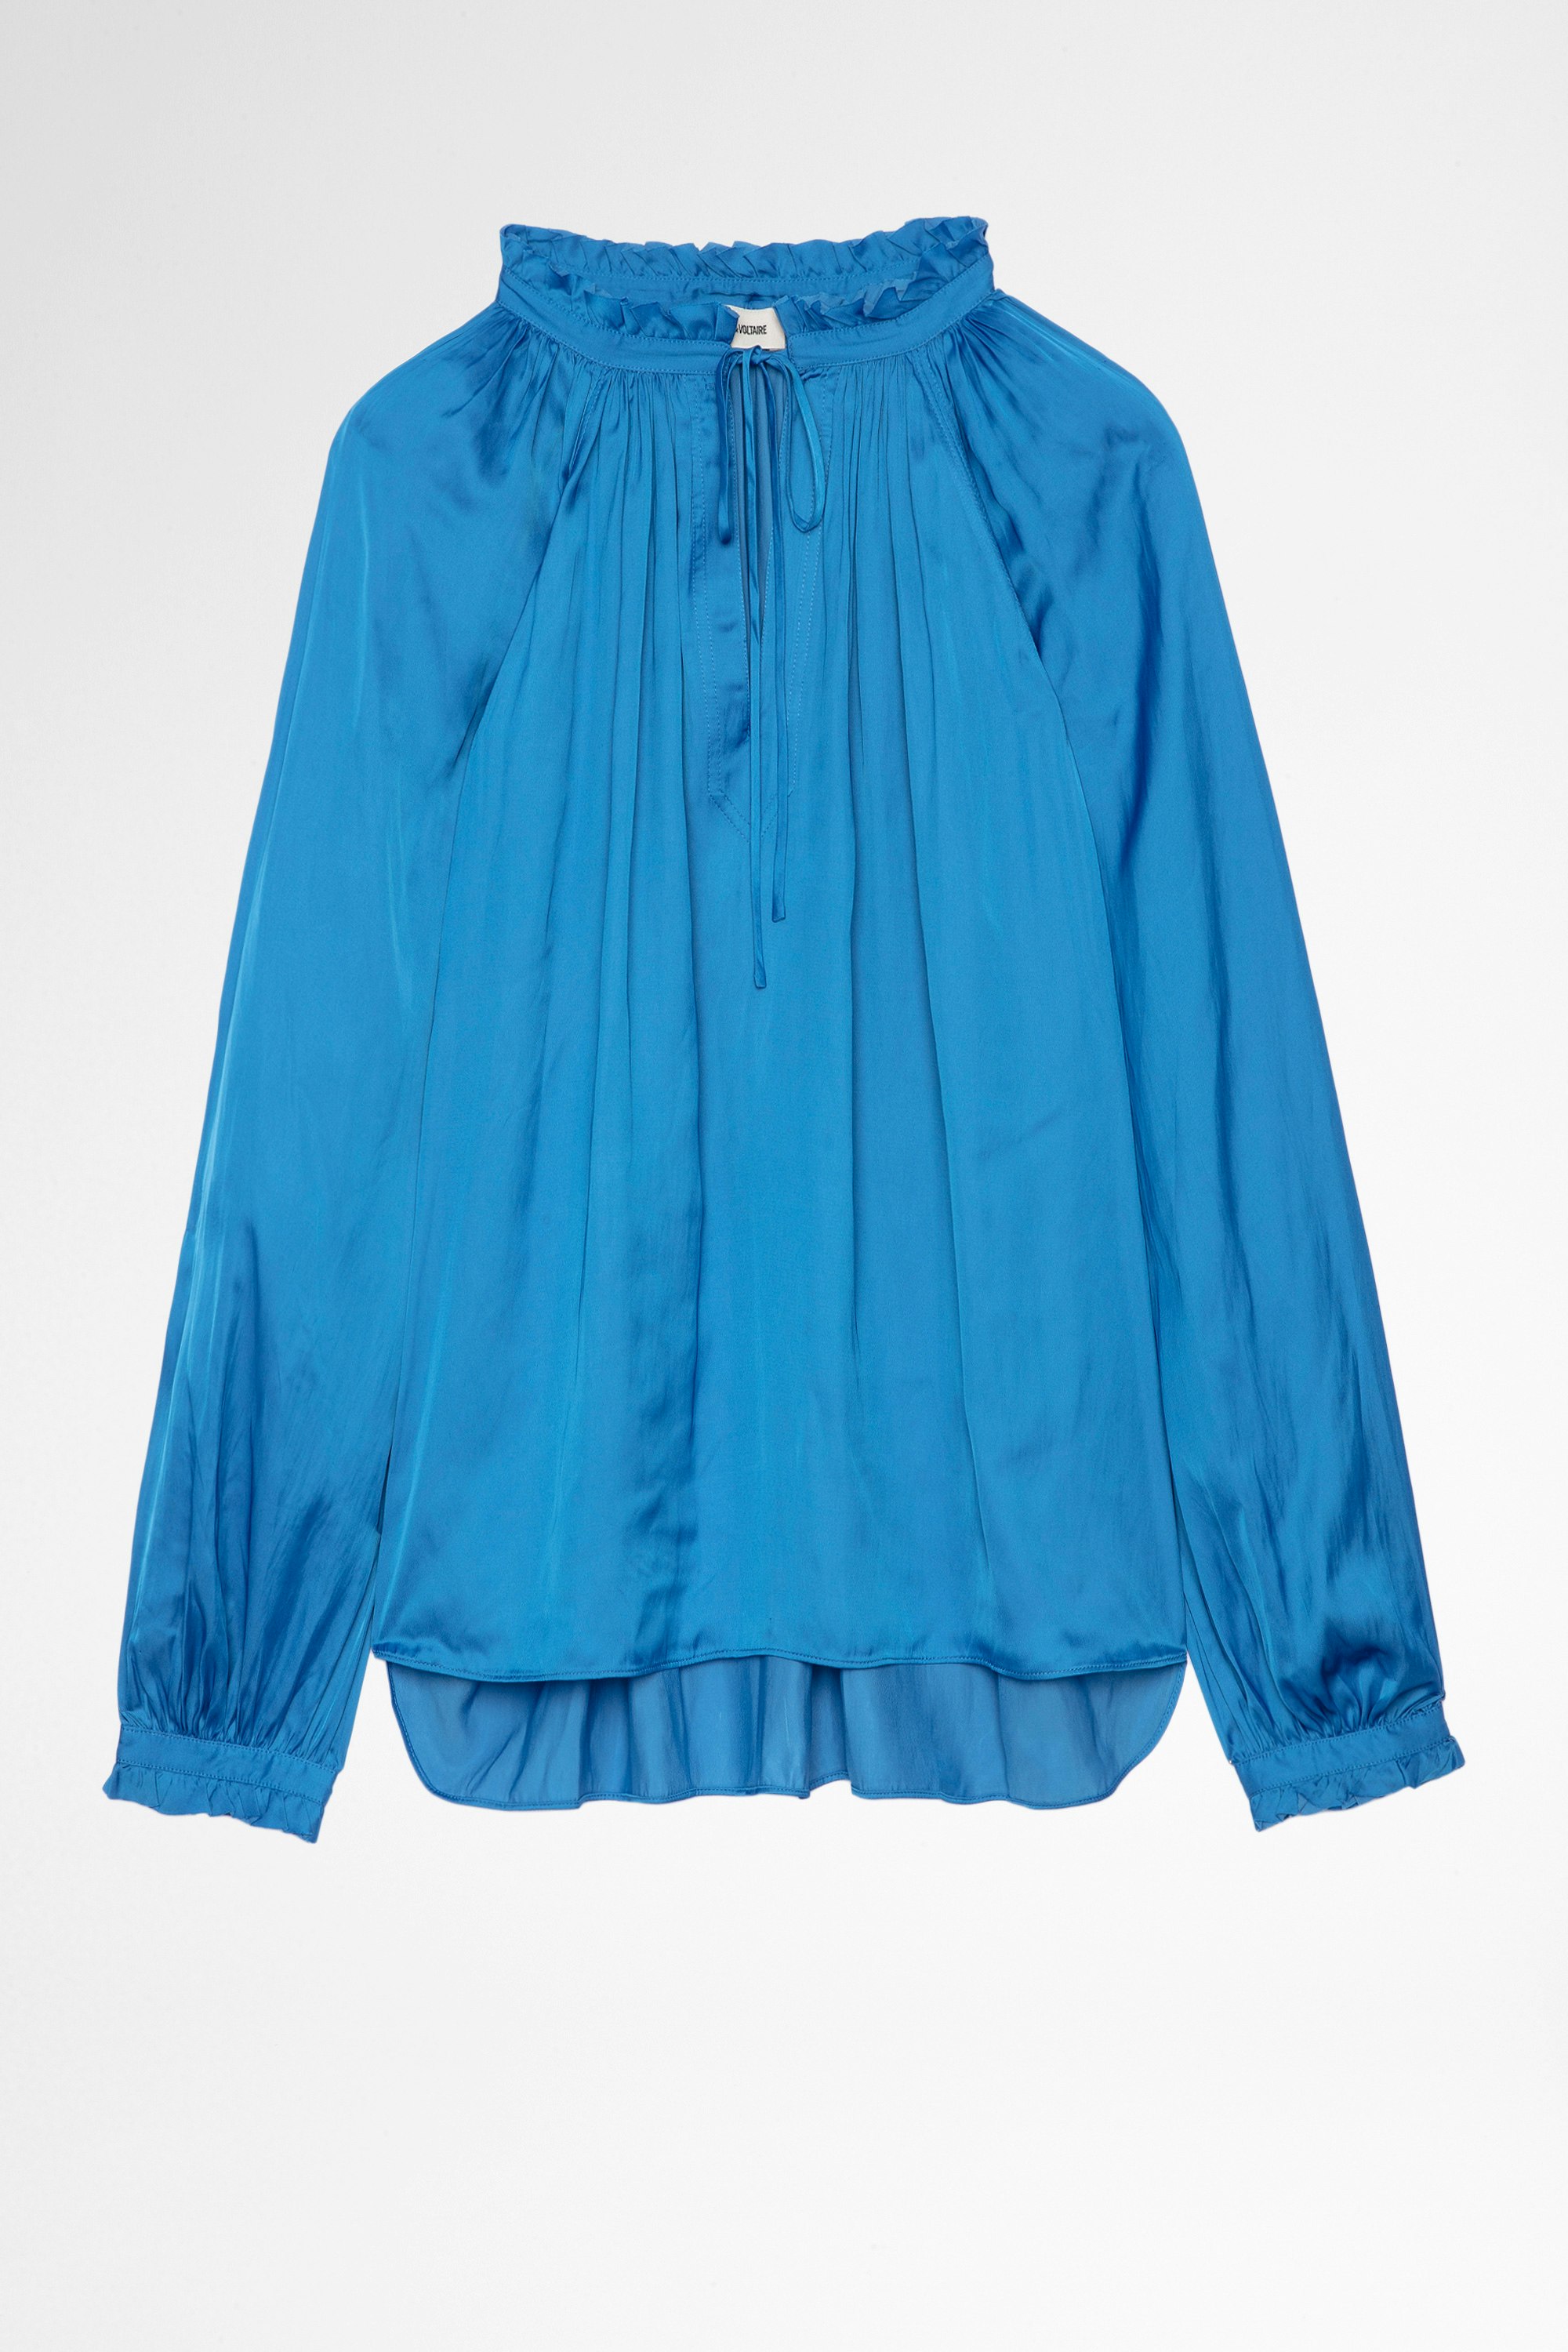 Theresa Satin Blouse Women's satin blouse in blue